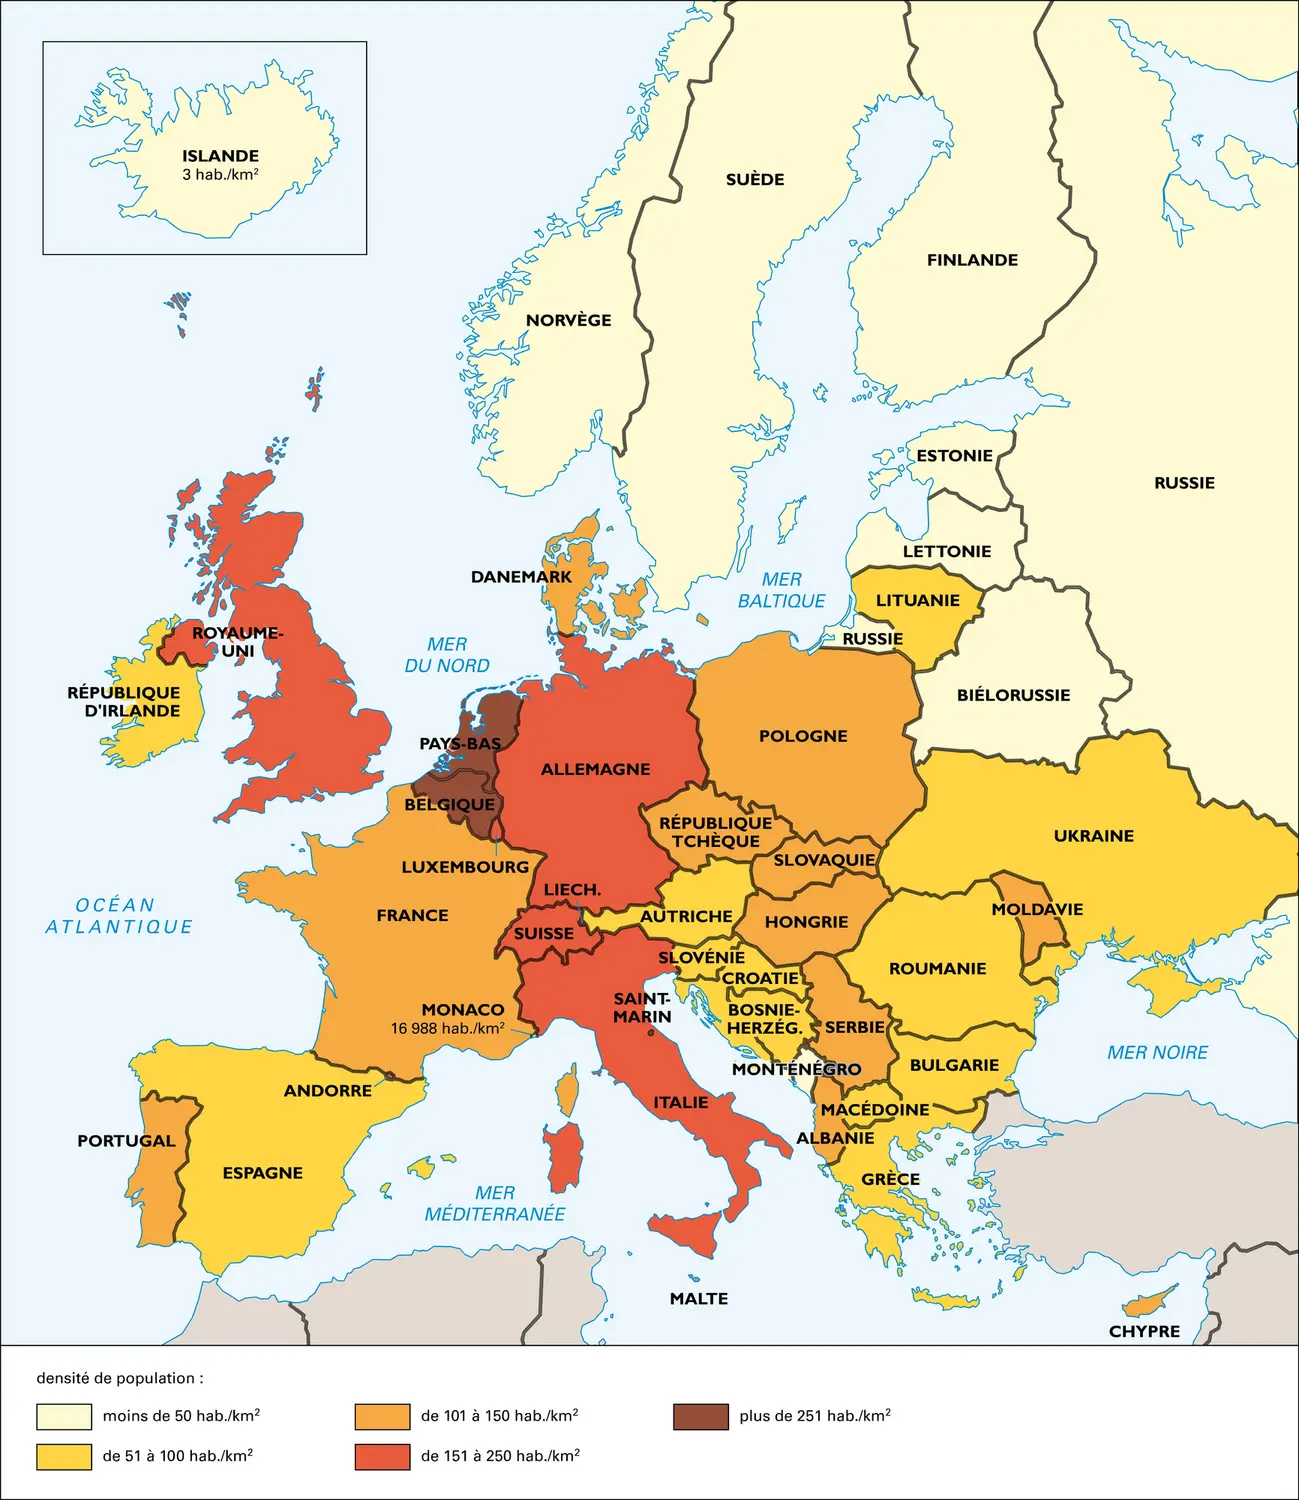 Europe : population